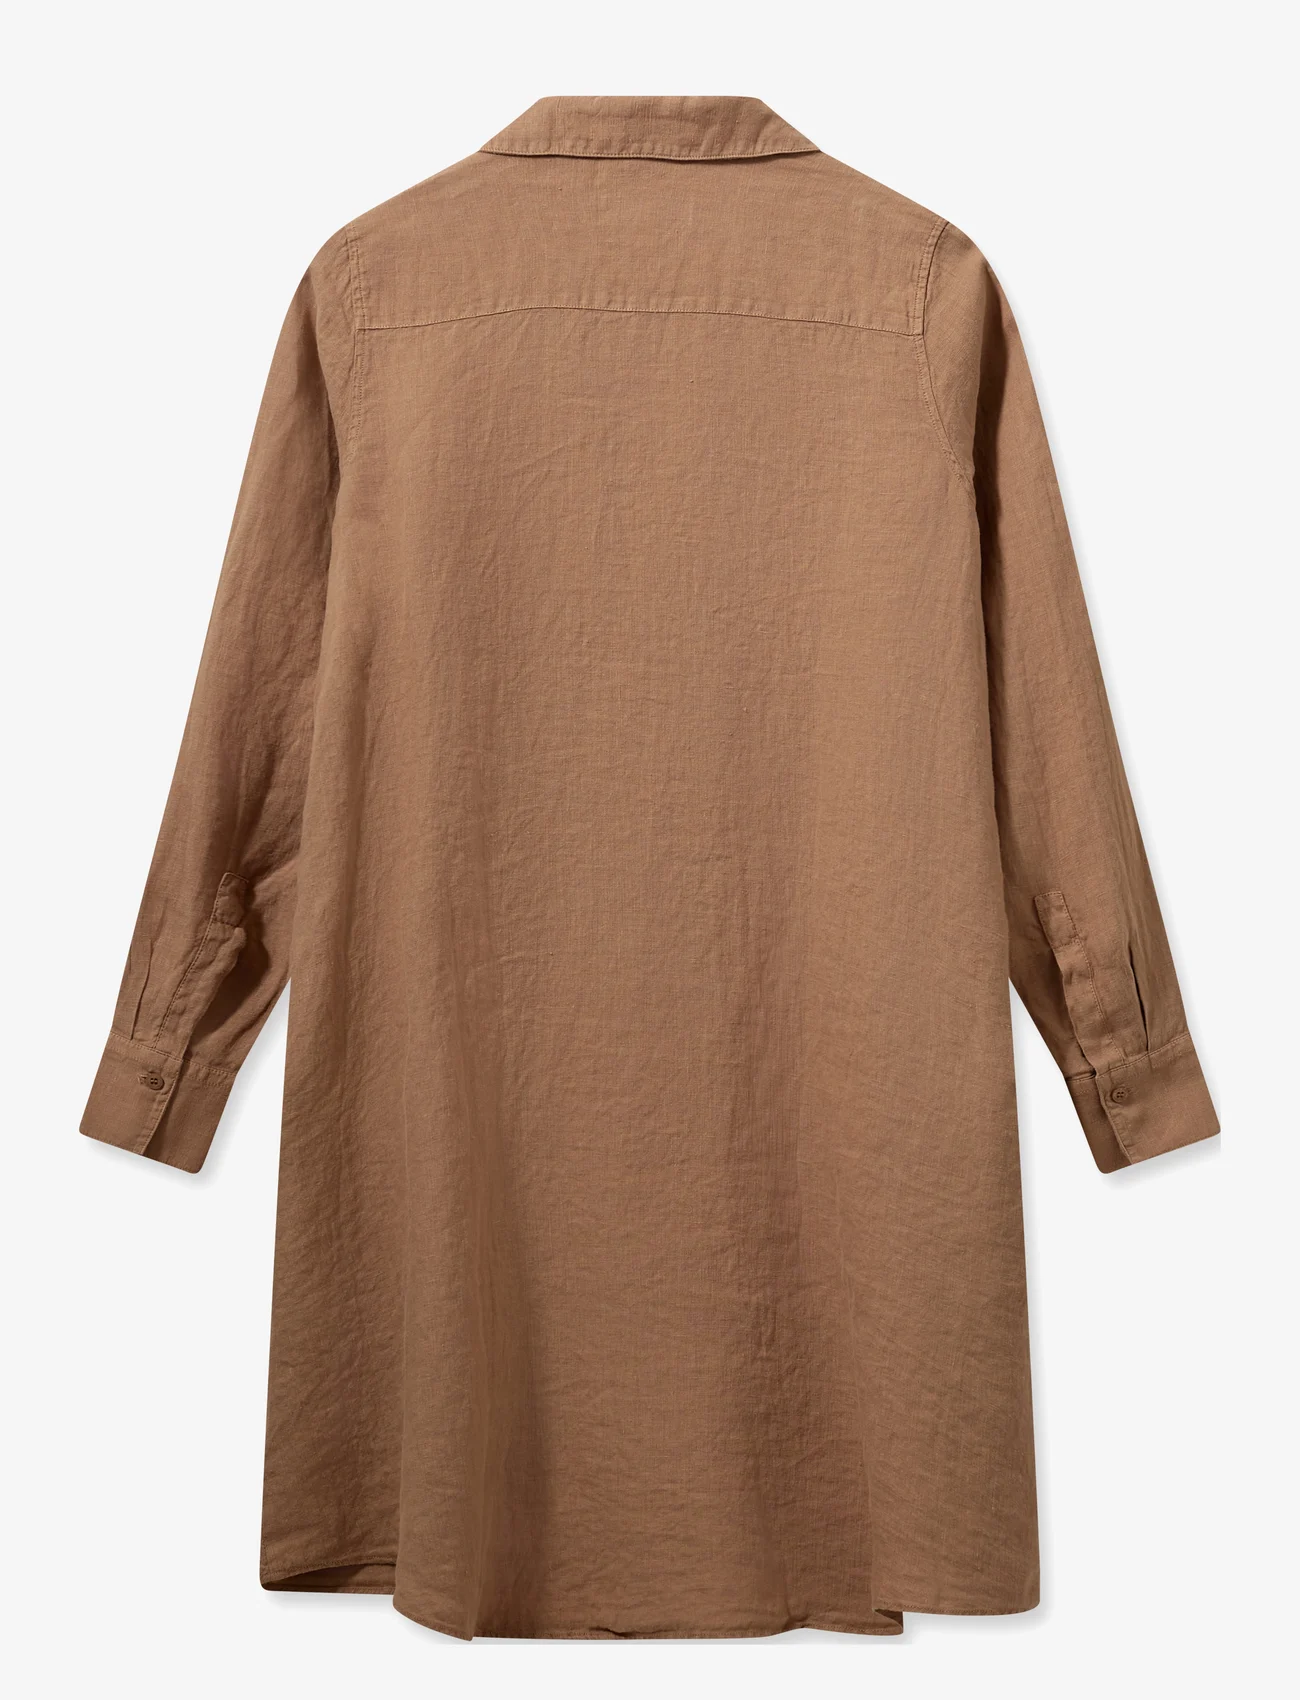 MOS MOSH - MMRielle Linen Dress - skjortekjoler - cinnamon swirl - 1